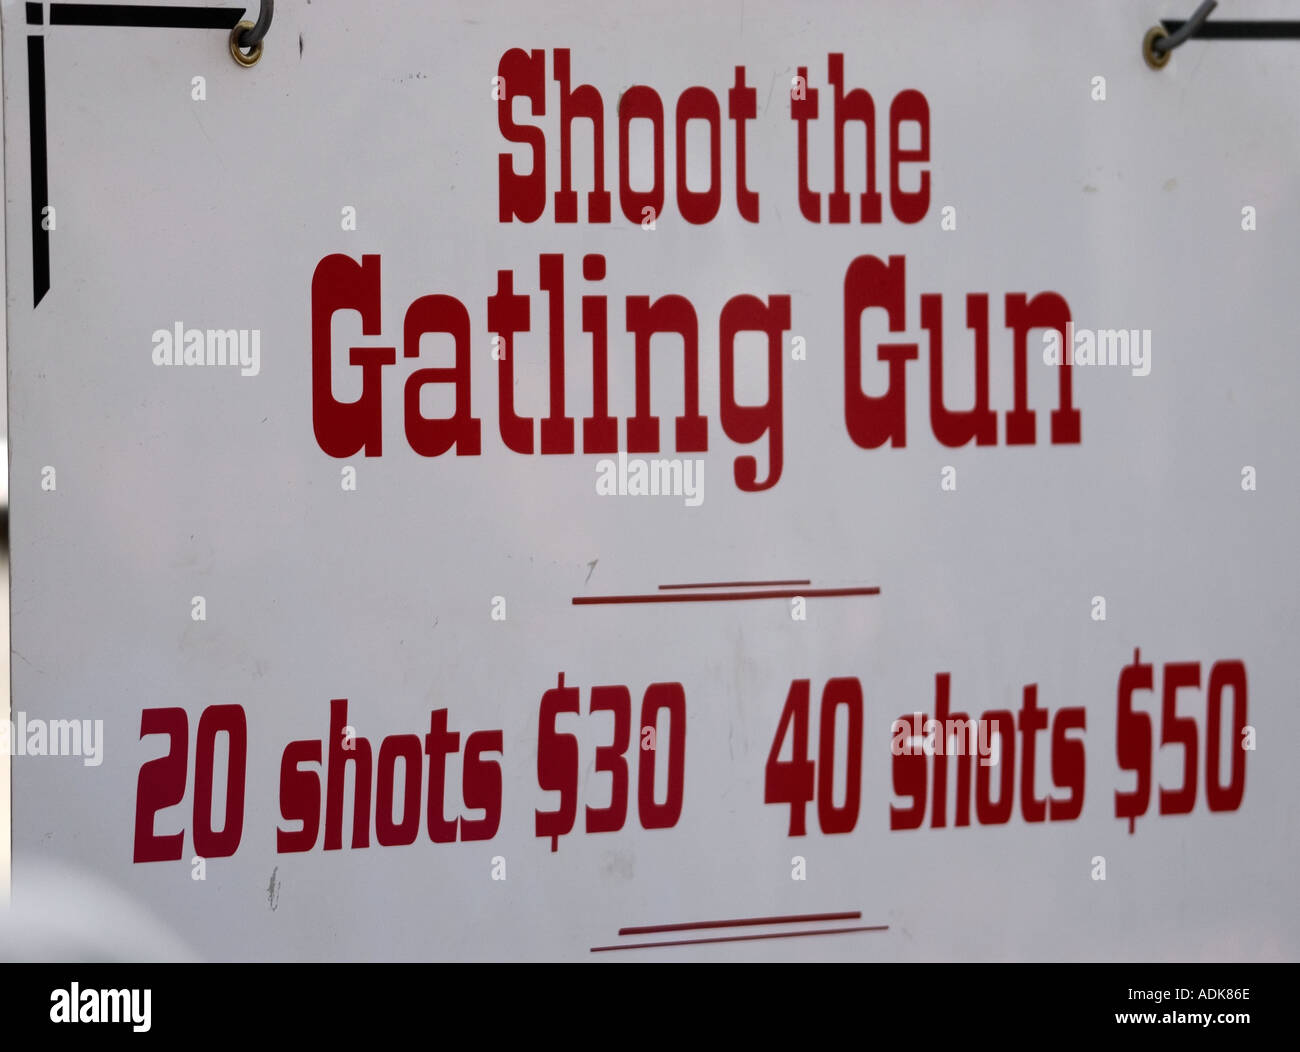 Machine gun show vendor Stock Photo